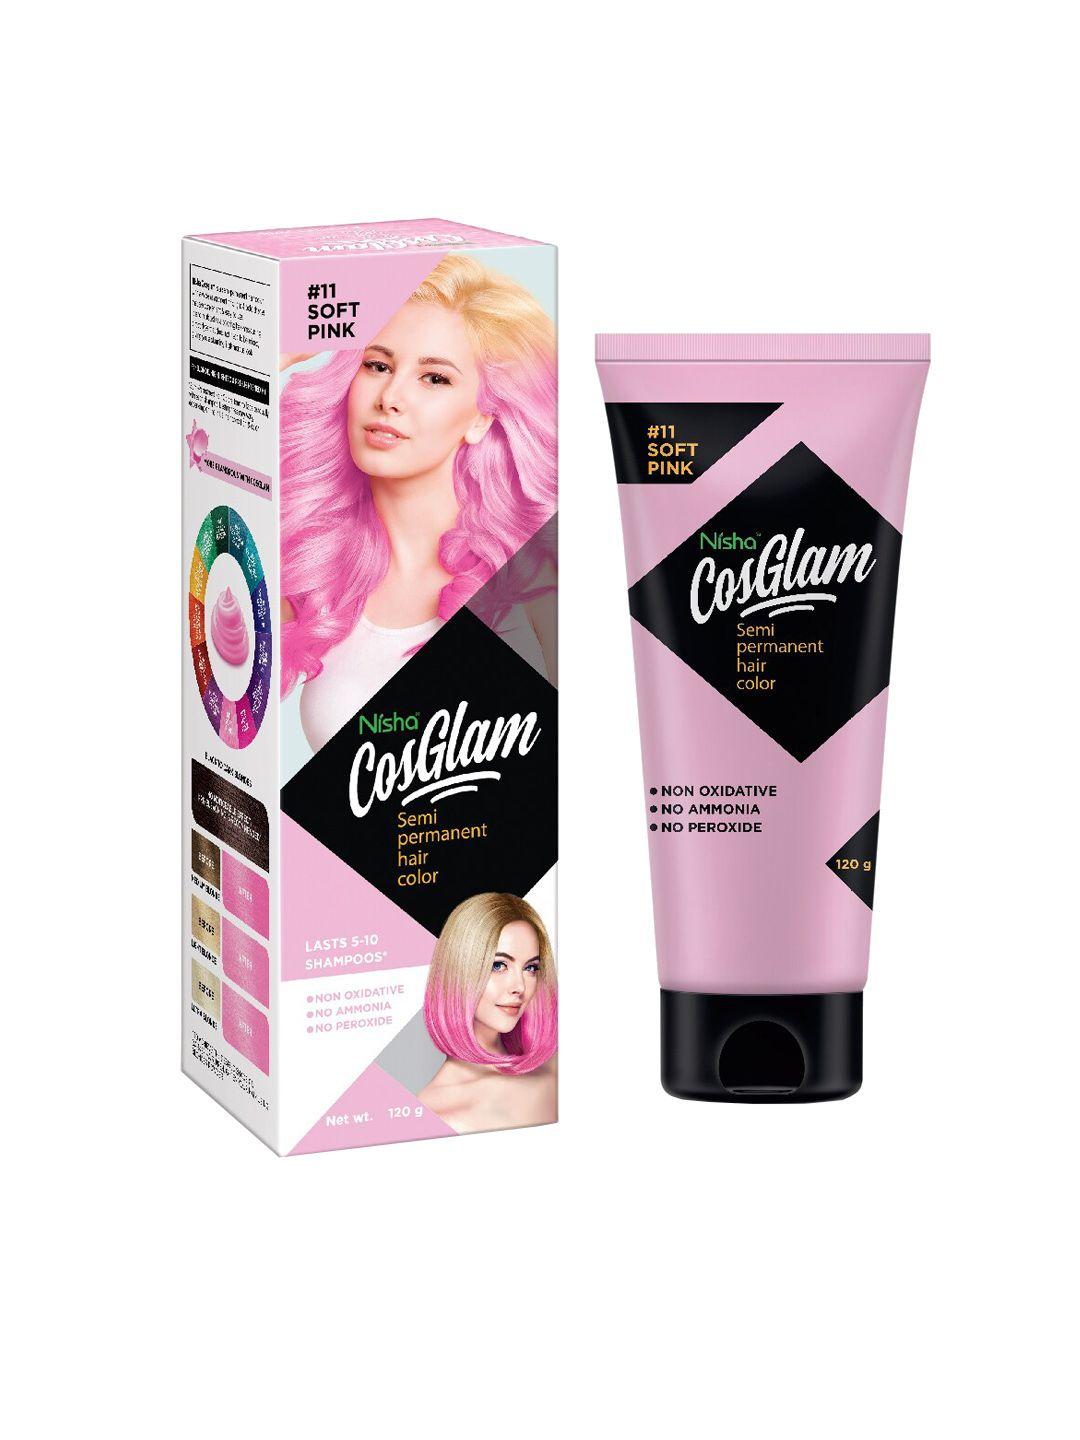 nisha cosglam semi permanent hair color 120 g - soft pink 11